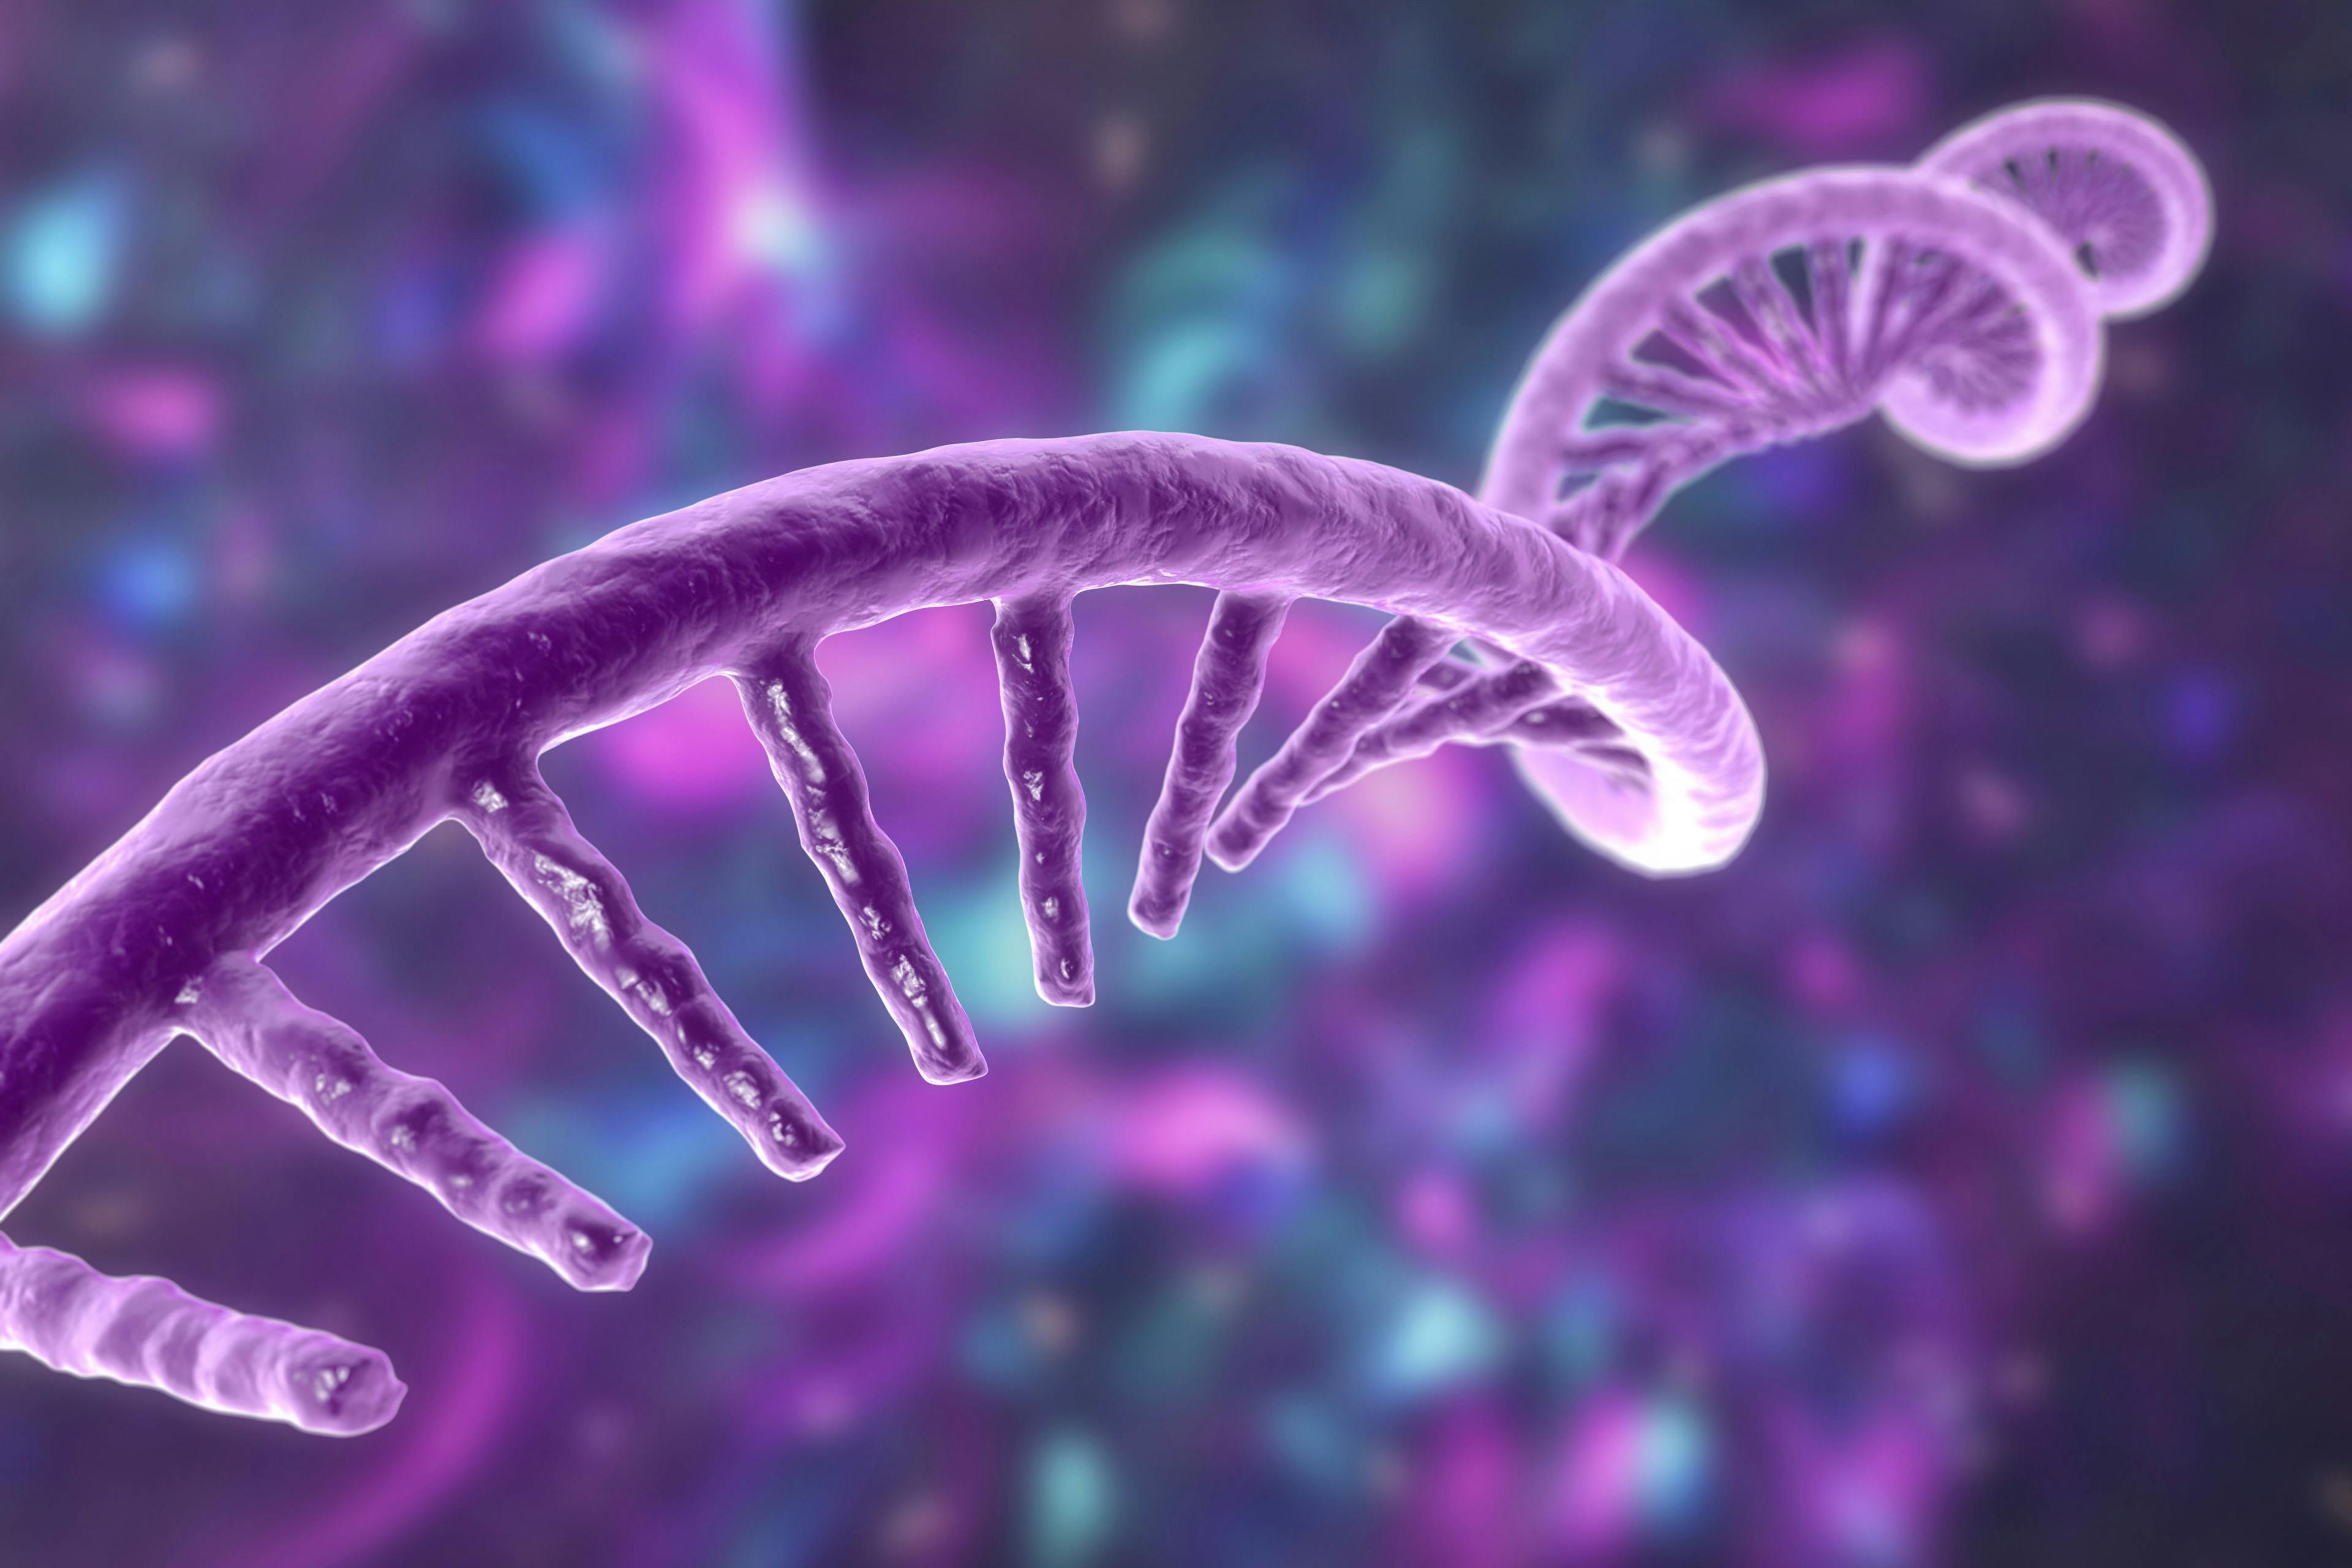 RNA strand against a purple background